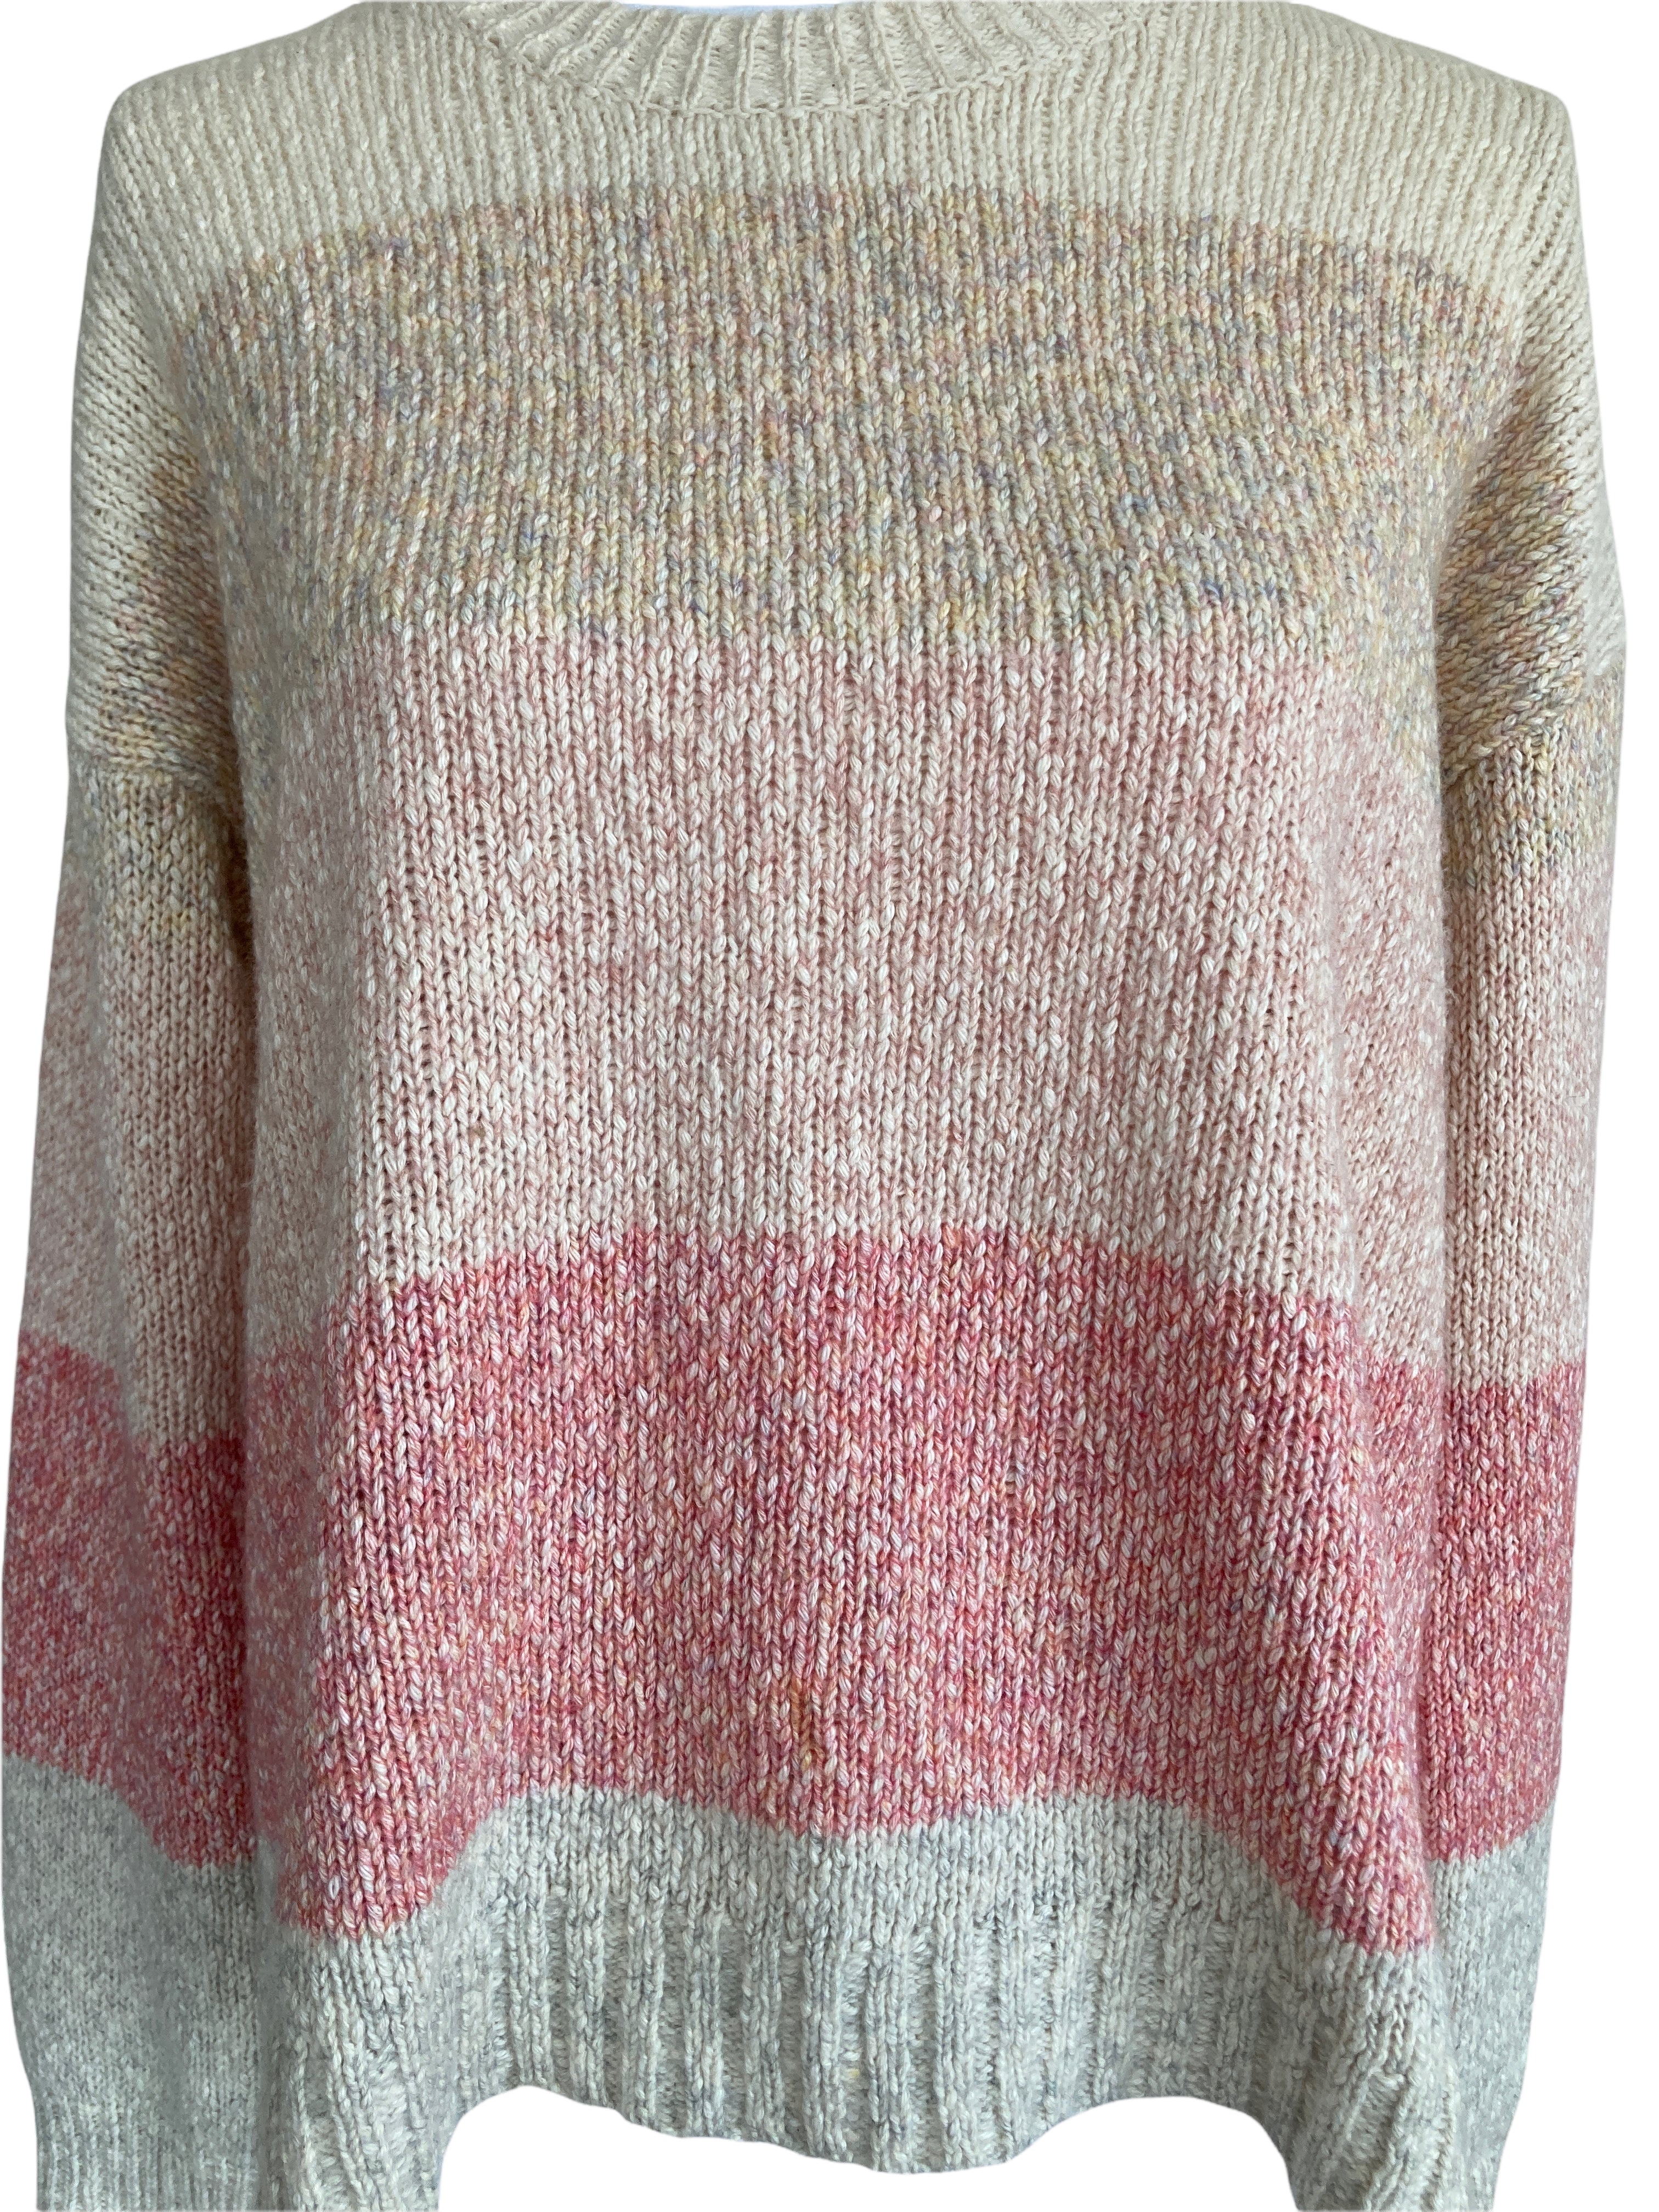 Splendid Cotton Blend Striped Sweater, S